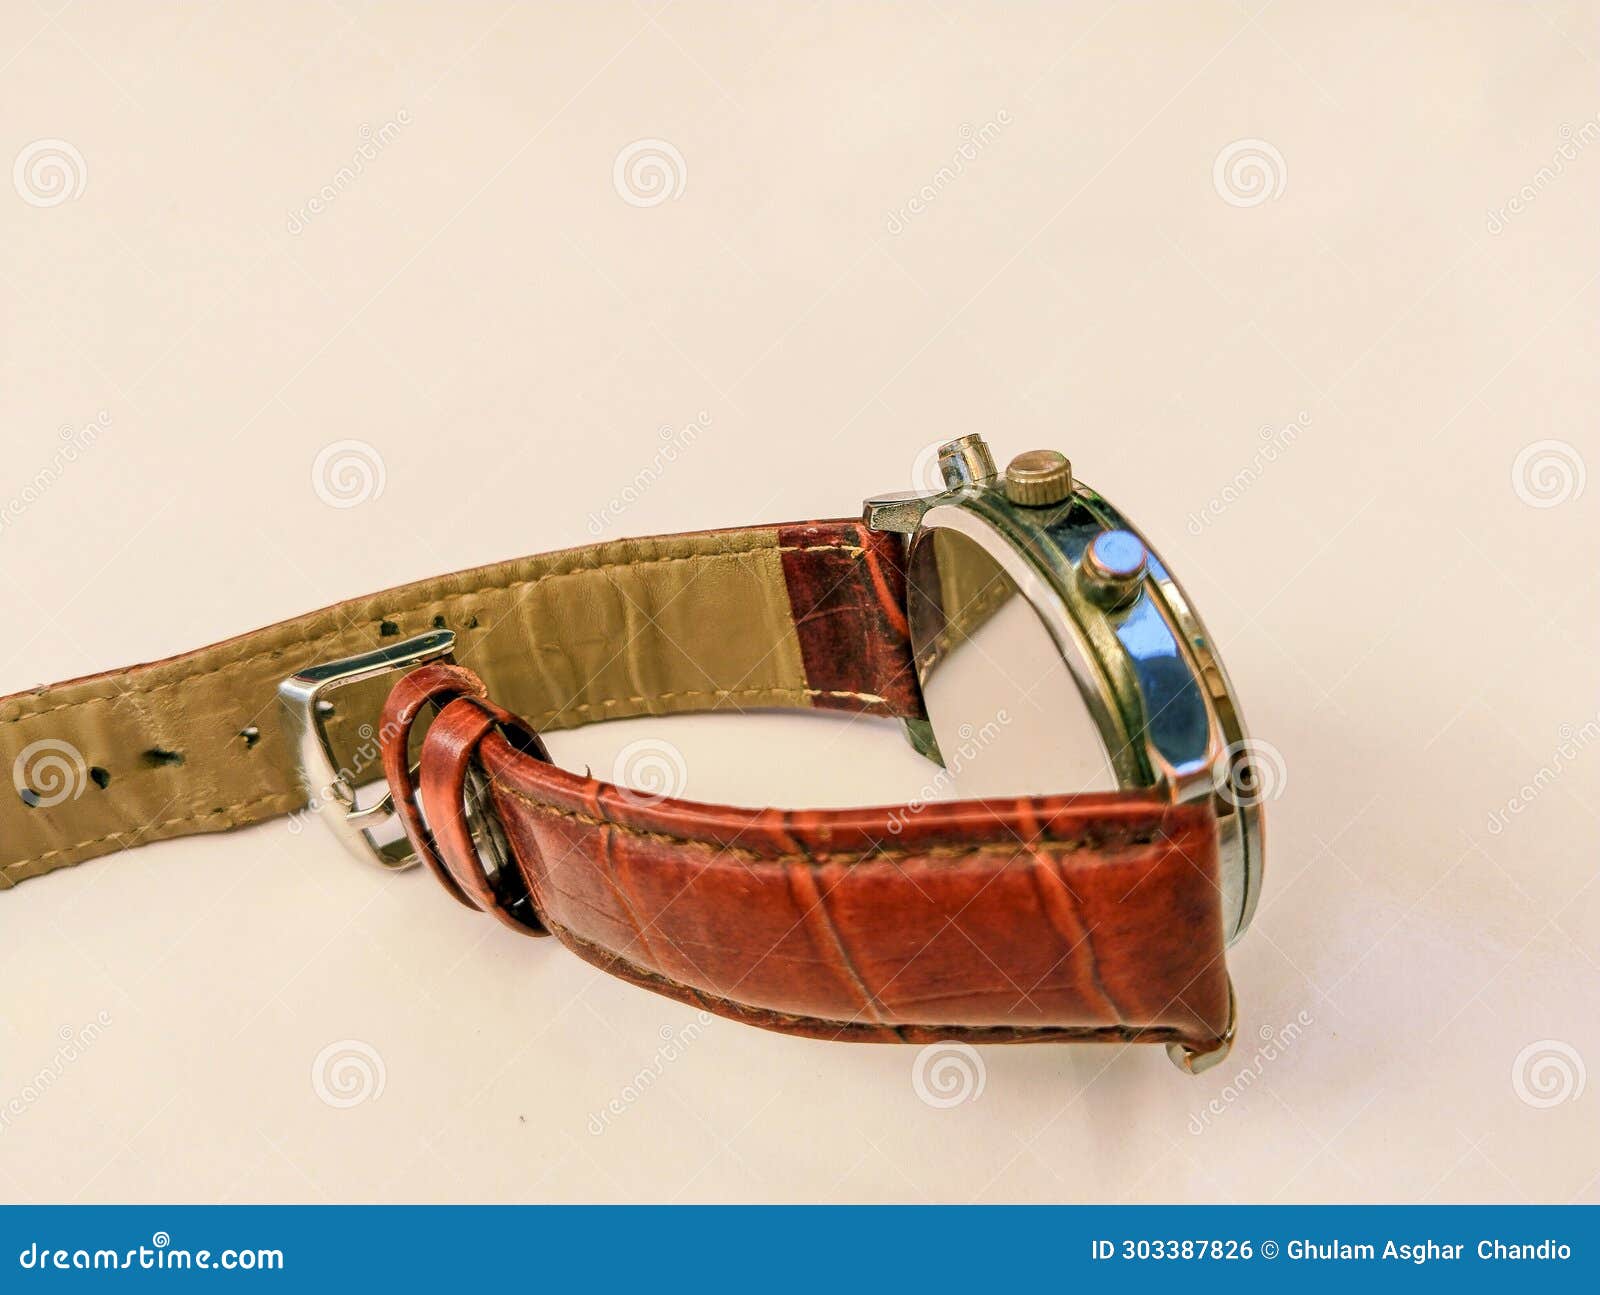 wristwatch timepiece with leather strap band, men's watch montre-bracelet, relojde pulsera, relogio pulso, gharee photo